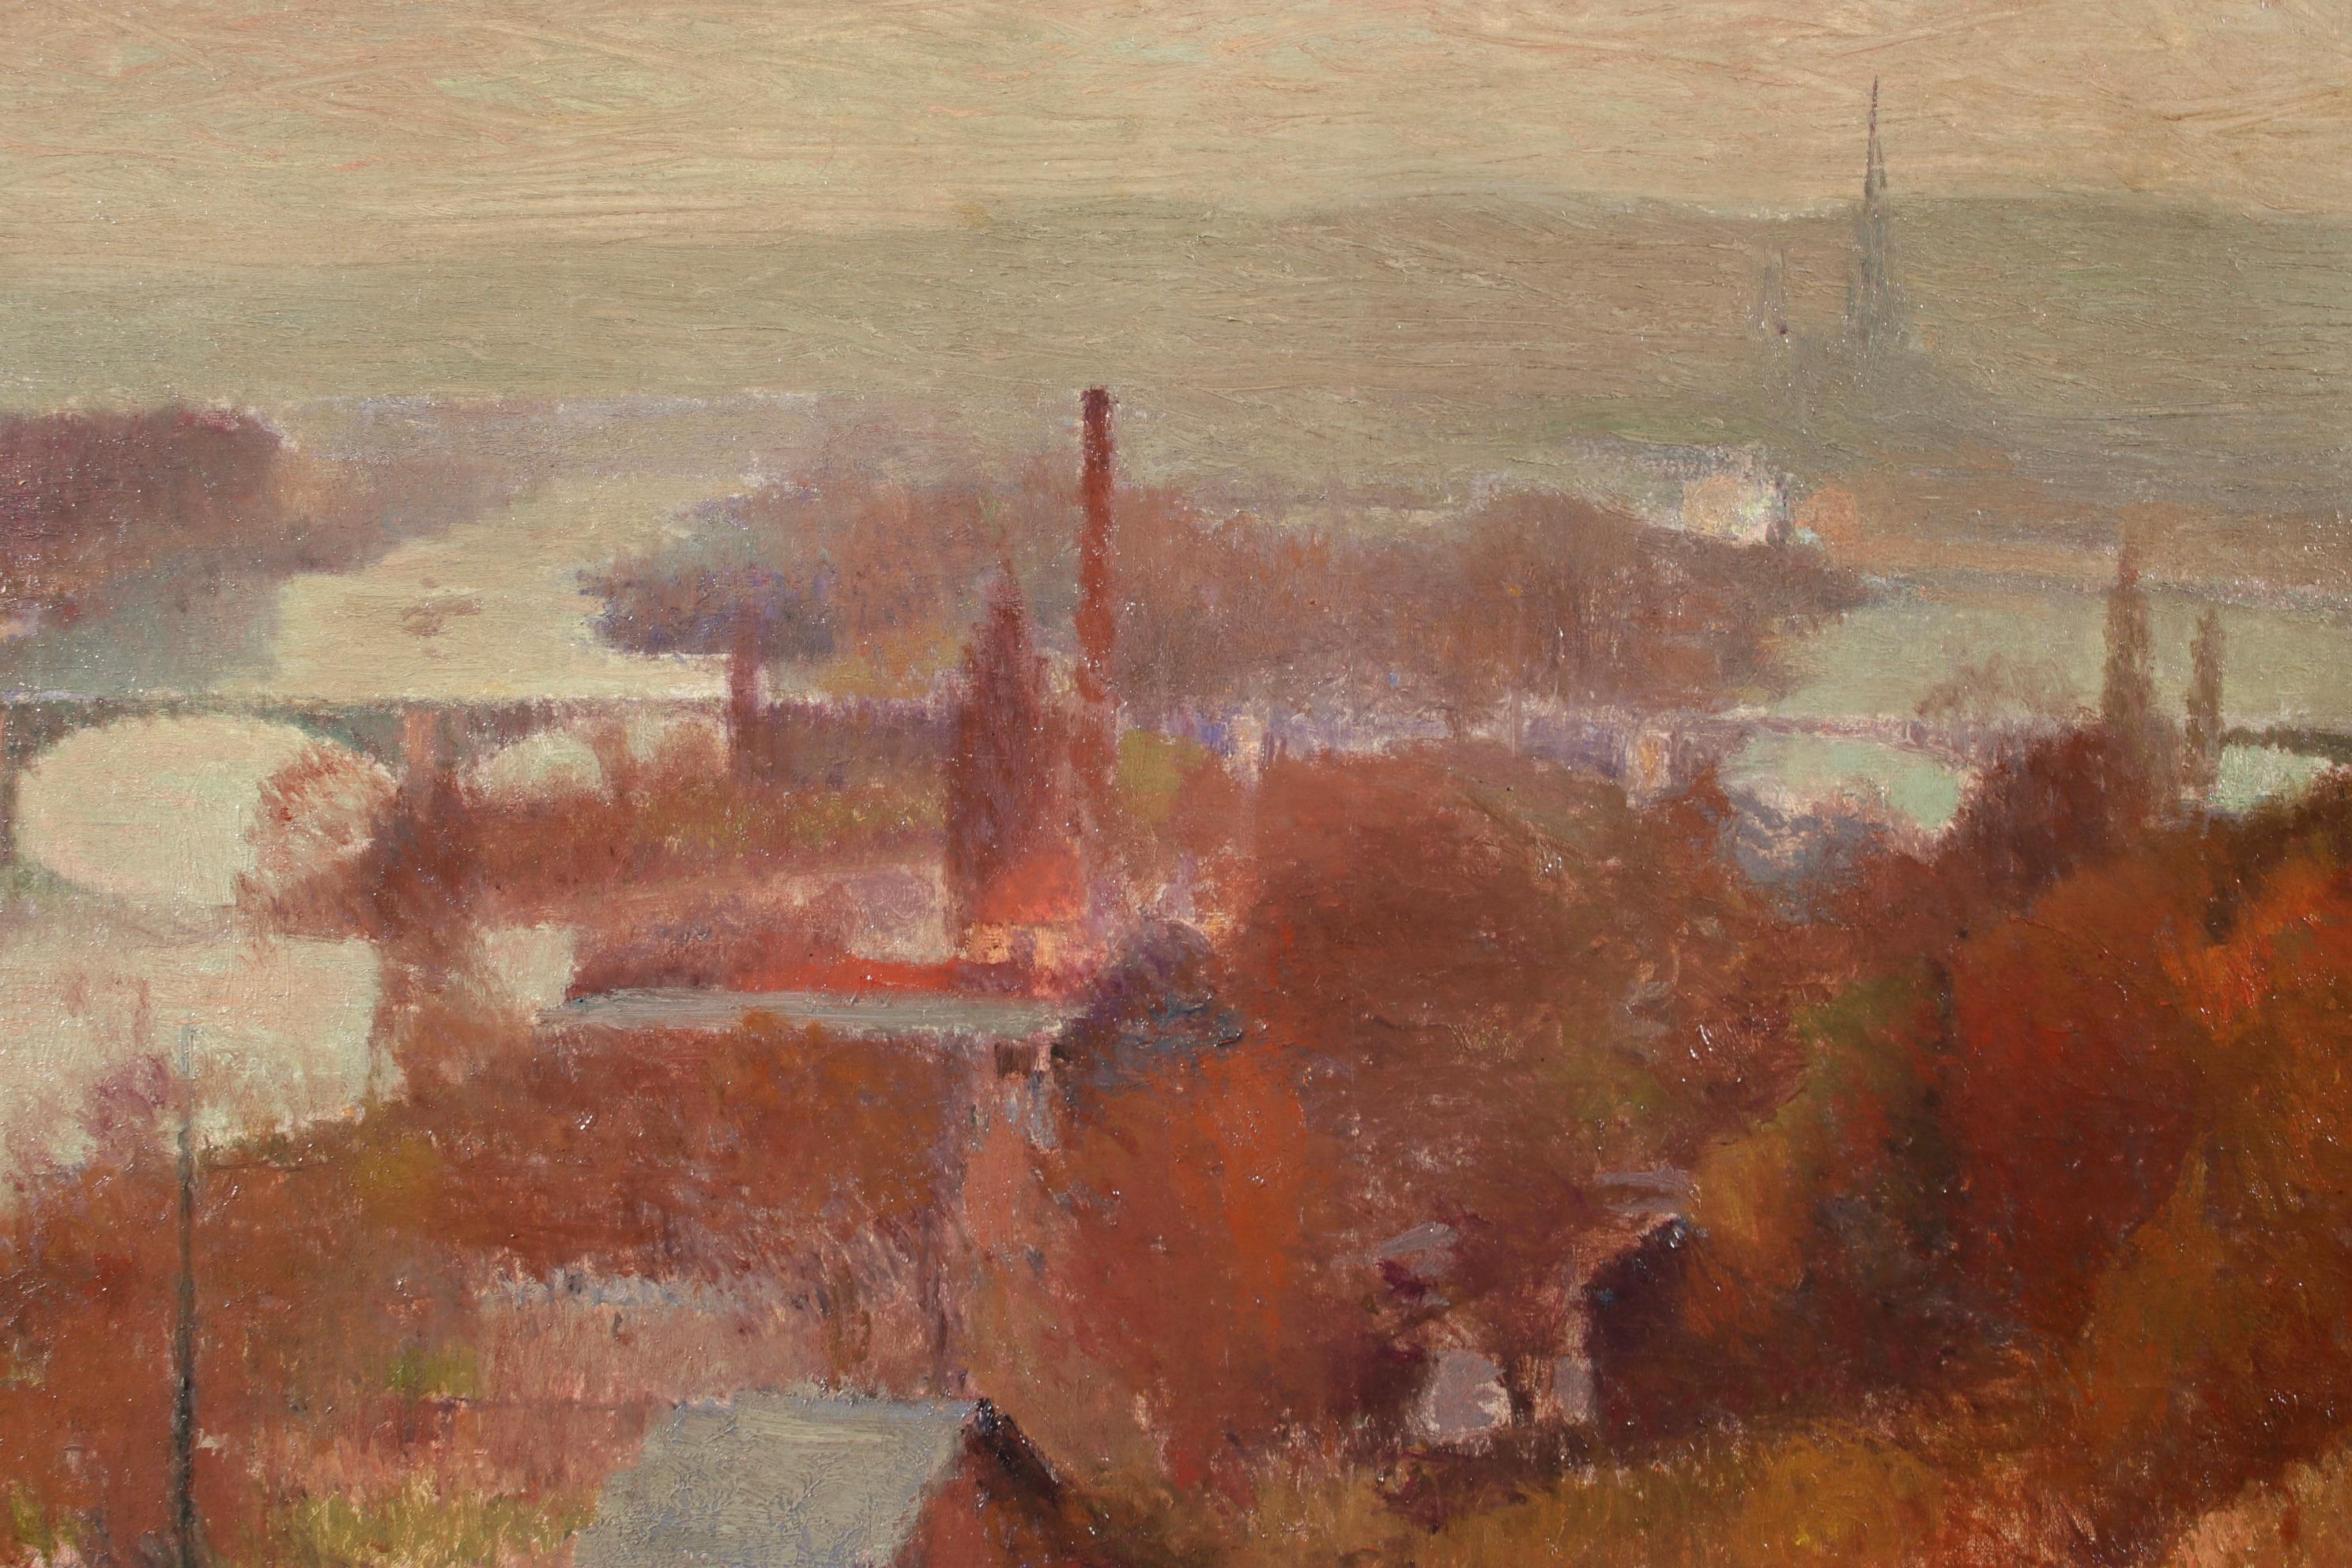 Morning Fog - Rouen - Impressionist Oil, River in Landscape by Joseph Delattre 9